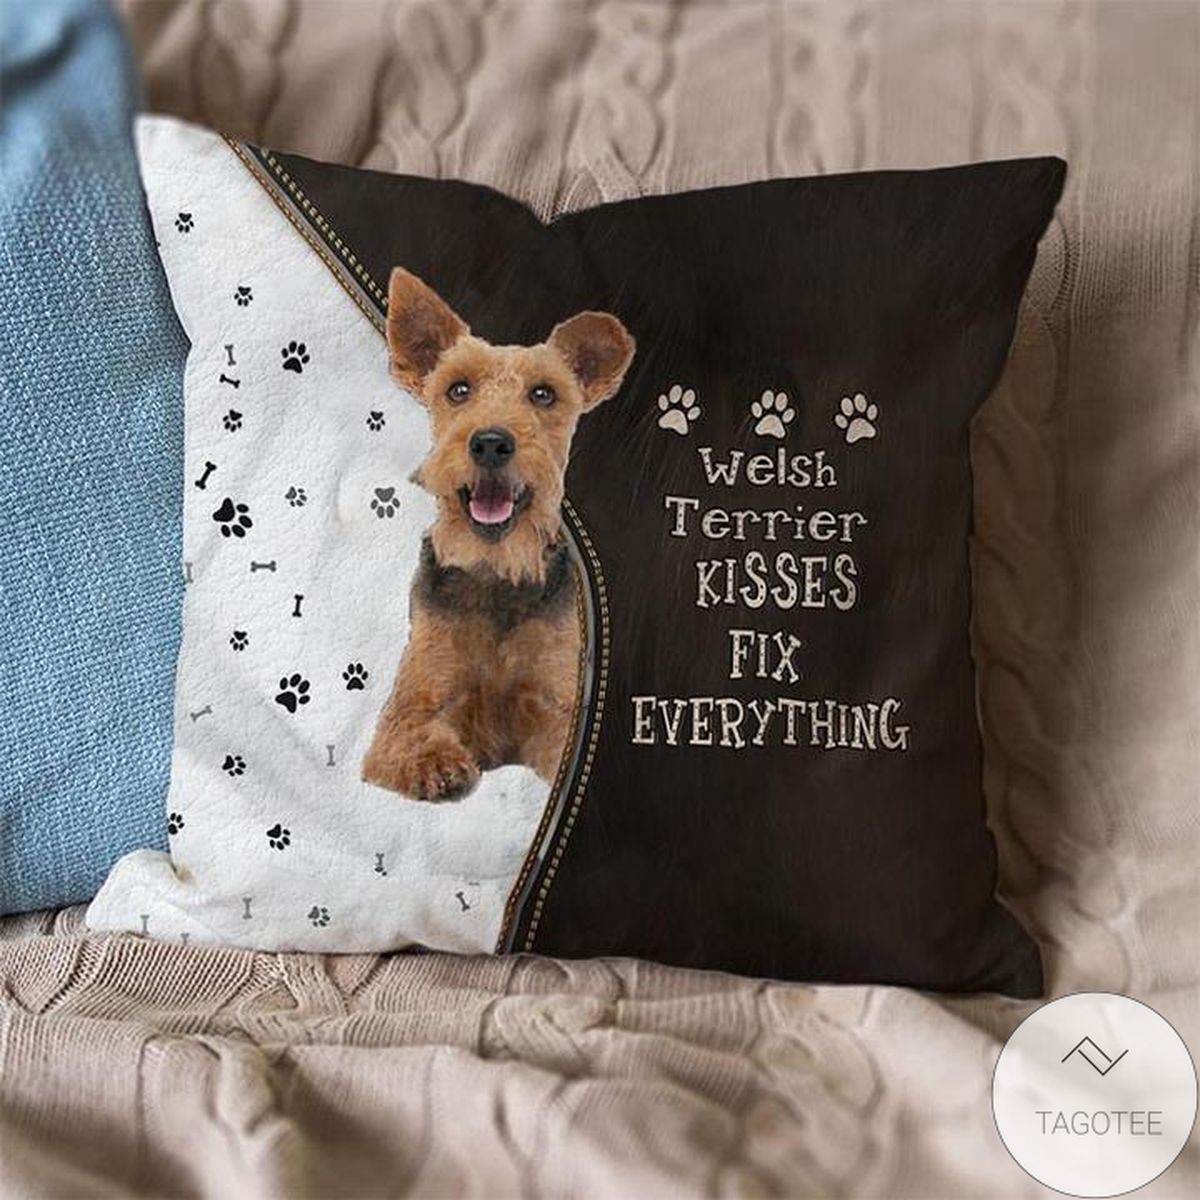 Welsh Terrier Kisses Fix Everything Pillowcase